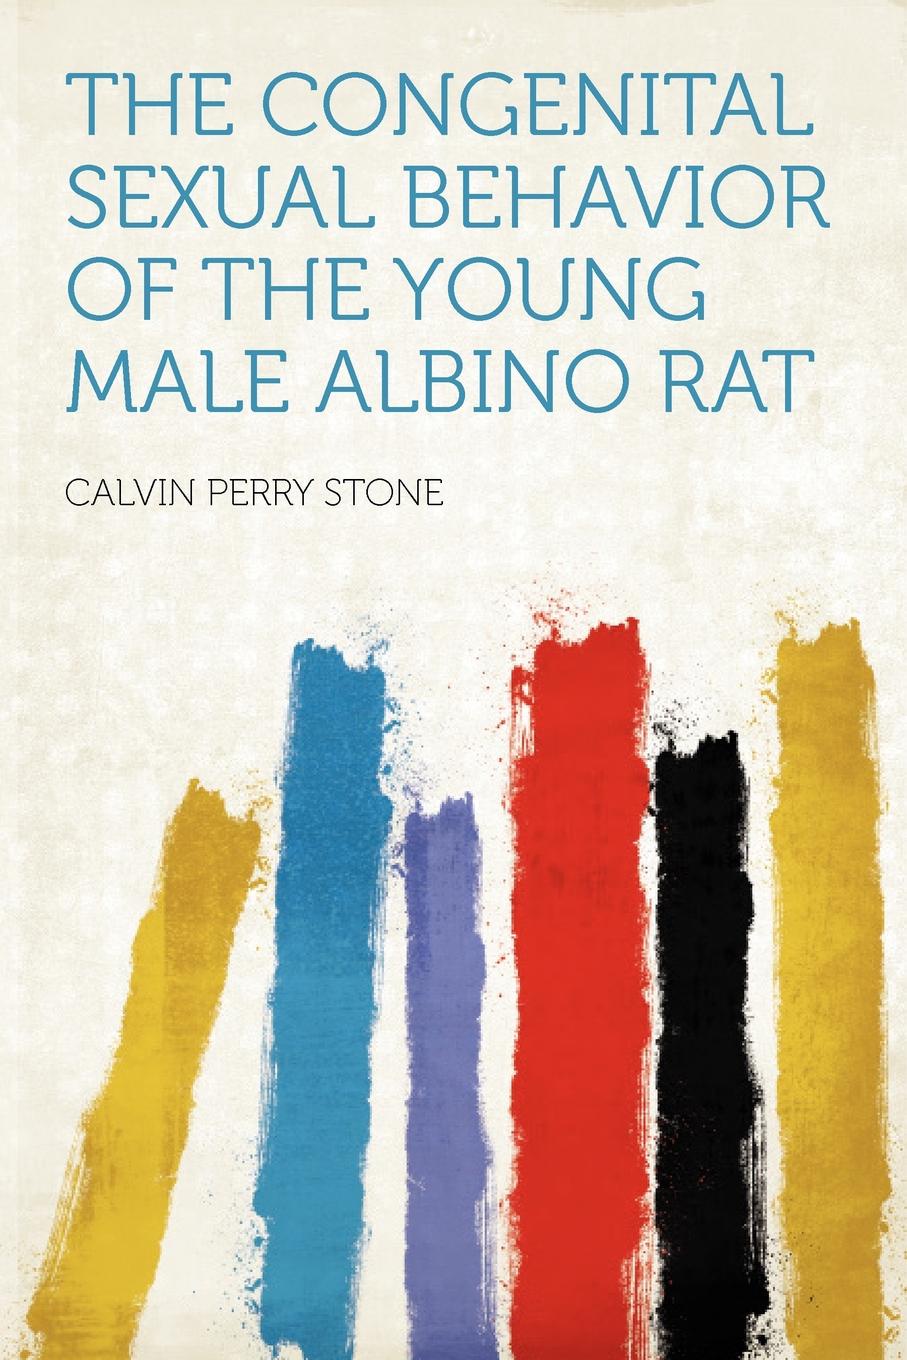 The Congenital Sexual Behavior of the Young Male Albino Rat